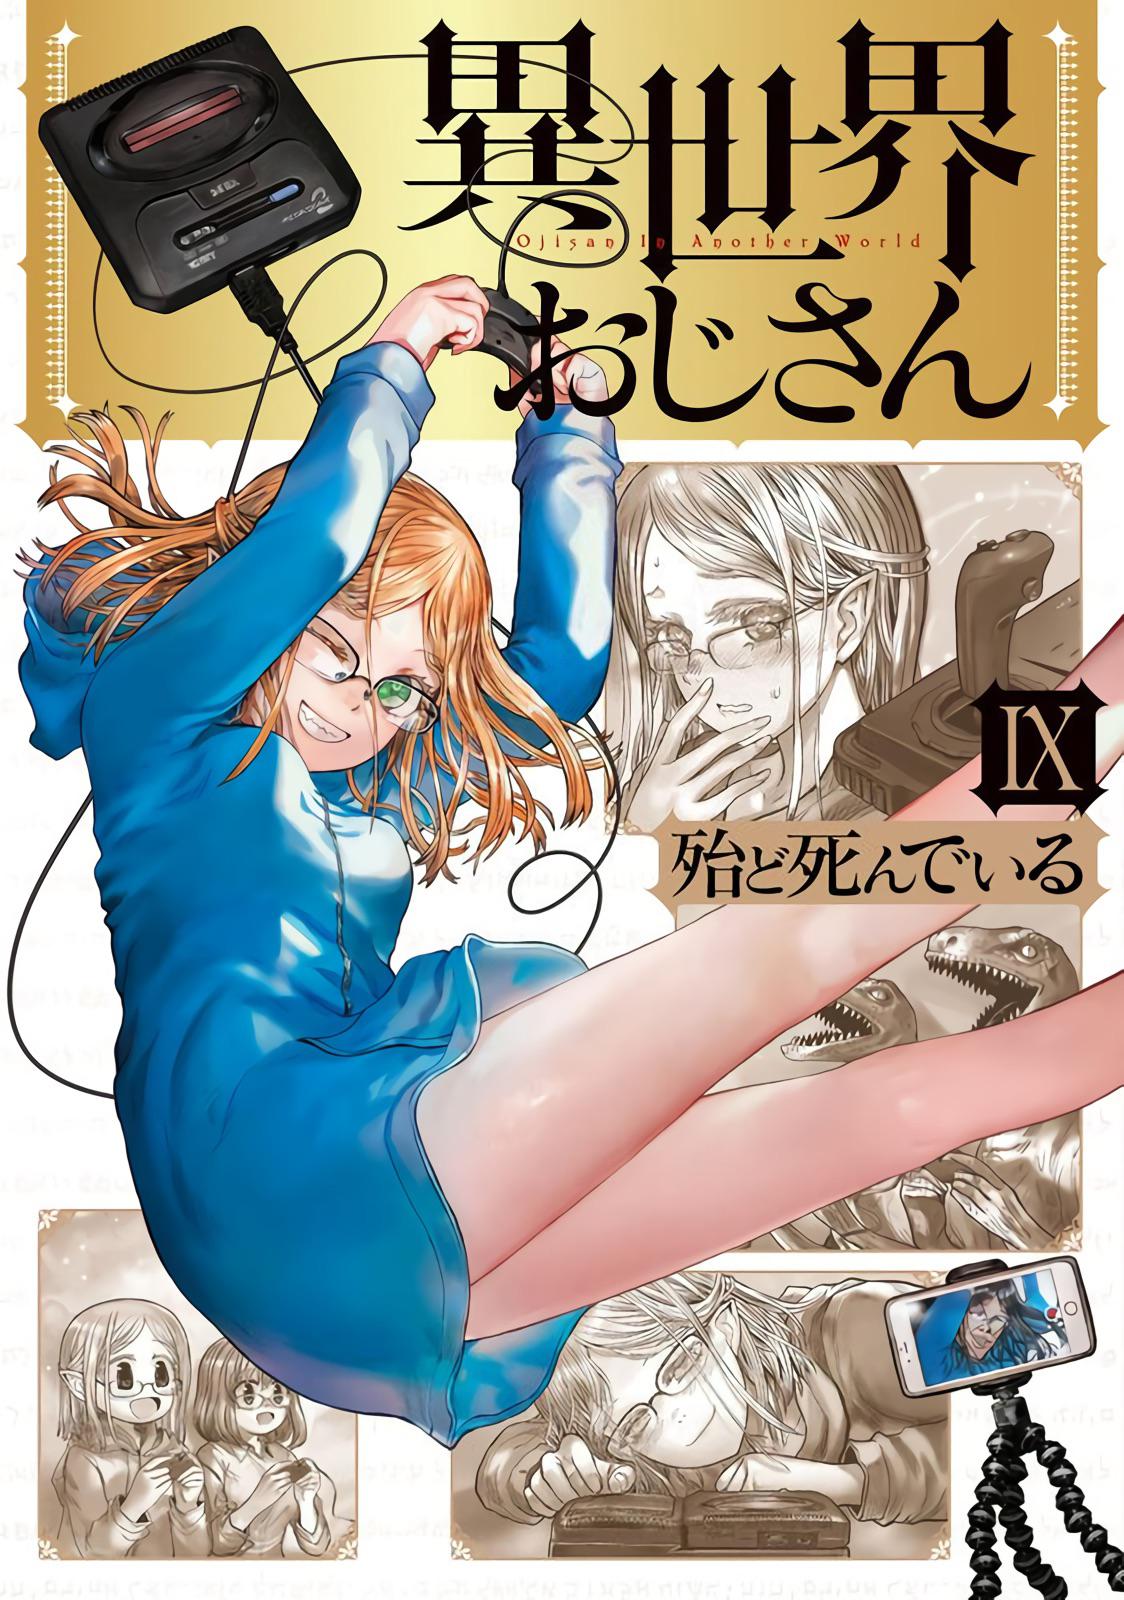 Manga Mogura RE (Manga & Anime News) on X: Isekai Ojisan (Uncle from  Another World) by Hotondo Shindeiru has 3,3 million copies (including  digital) in circulation for vols 1-9 t.co0Jki9qP8Wm  X